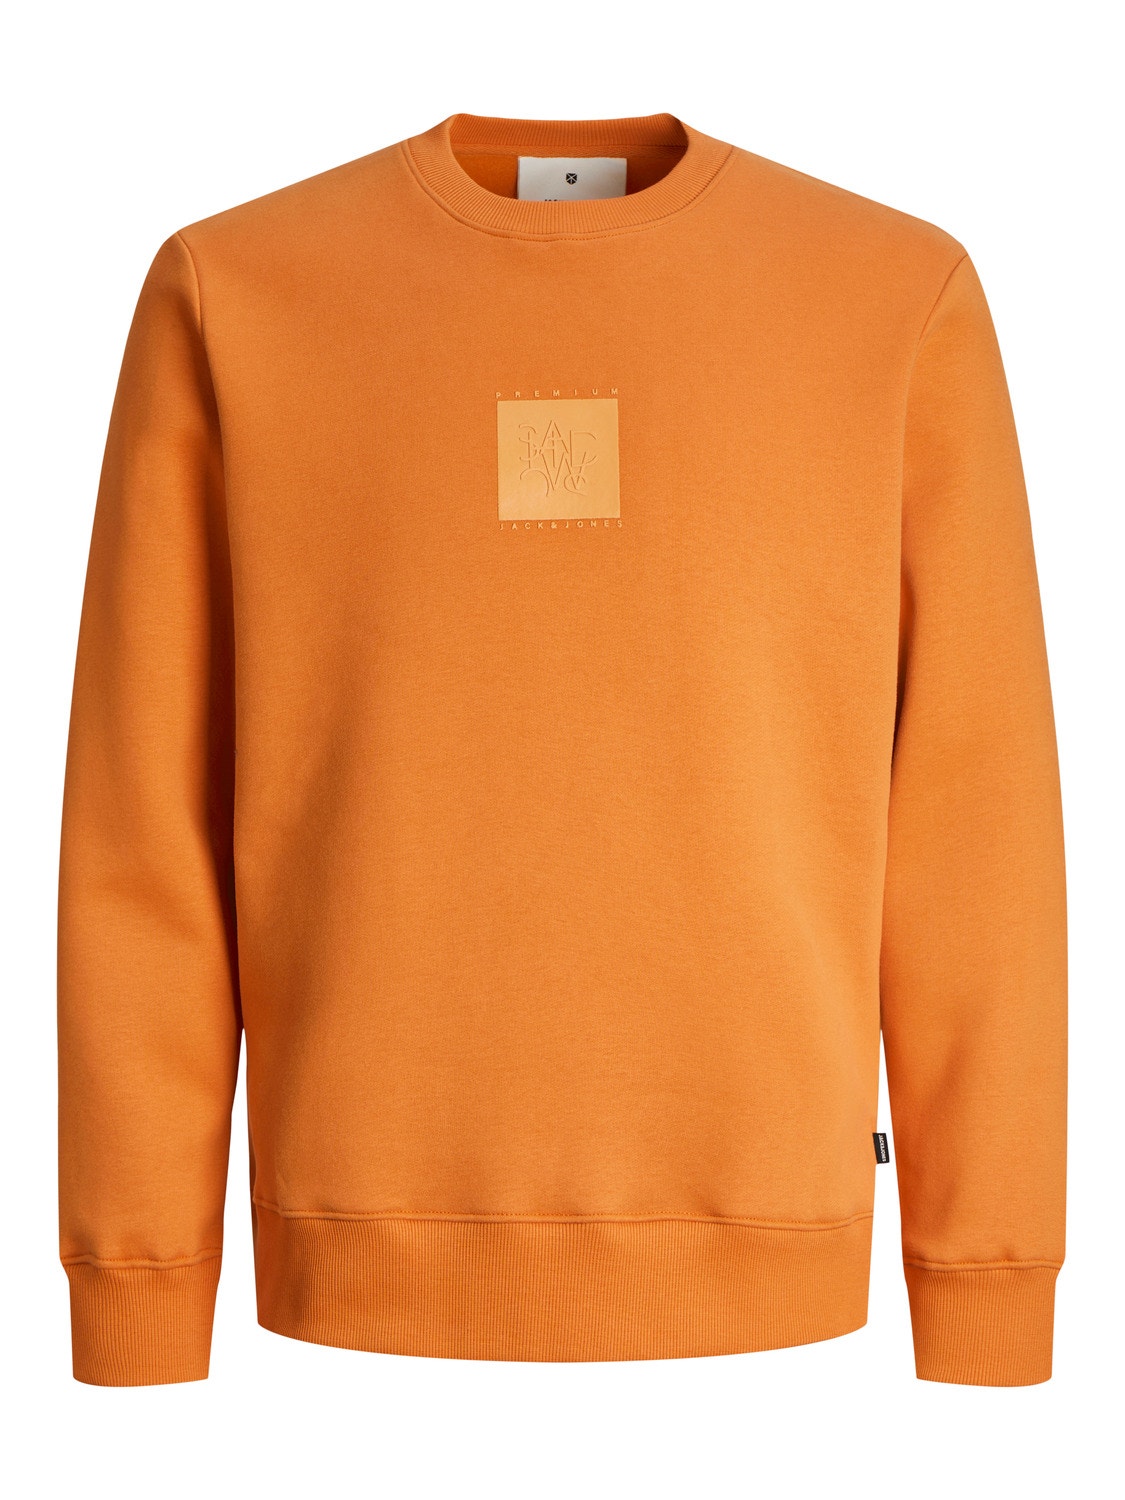 Jack & Jones Plain Crewn Neck Sweatshirt -Peach Caramel - 12250403